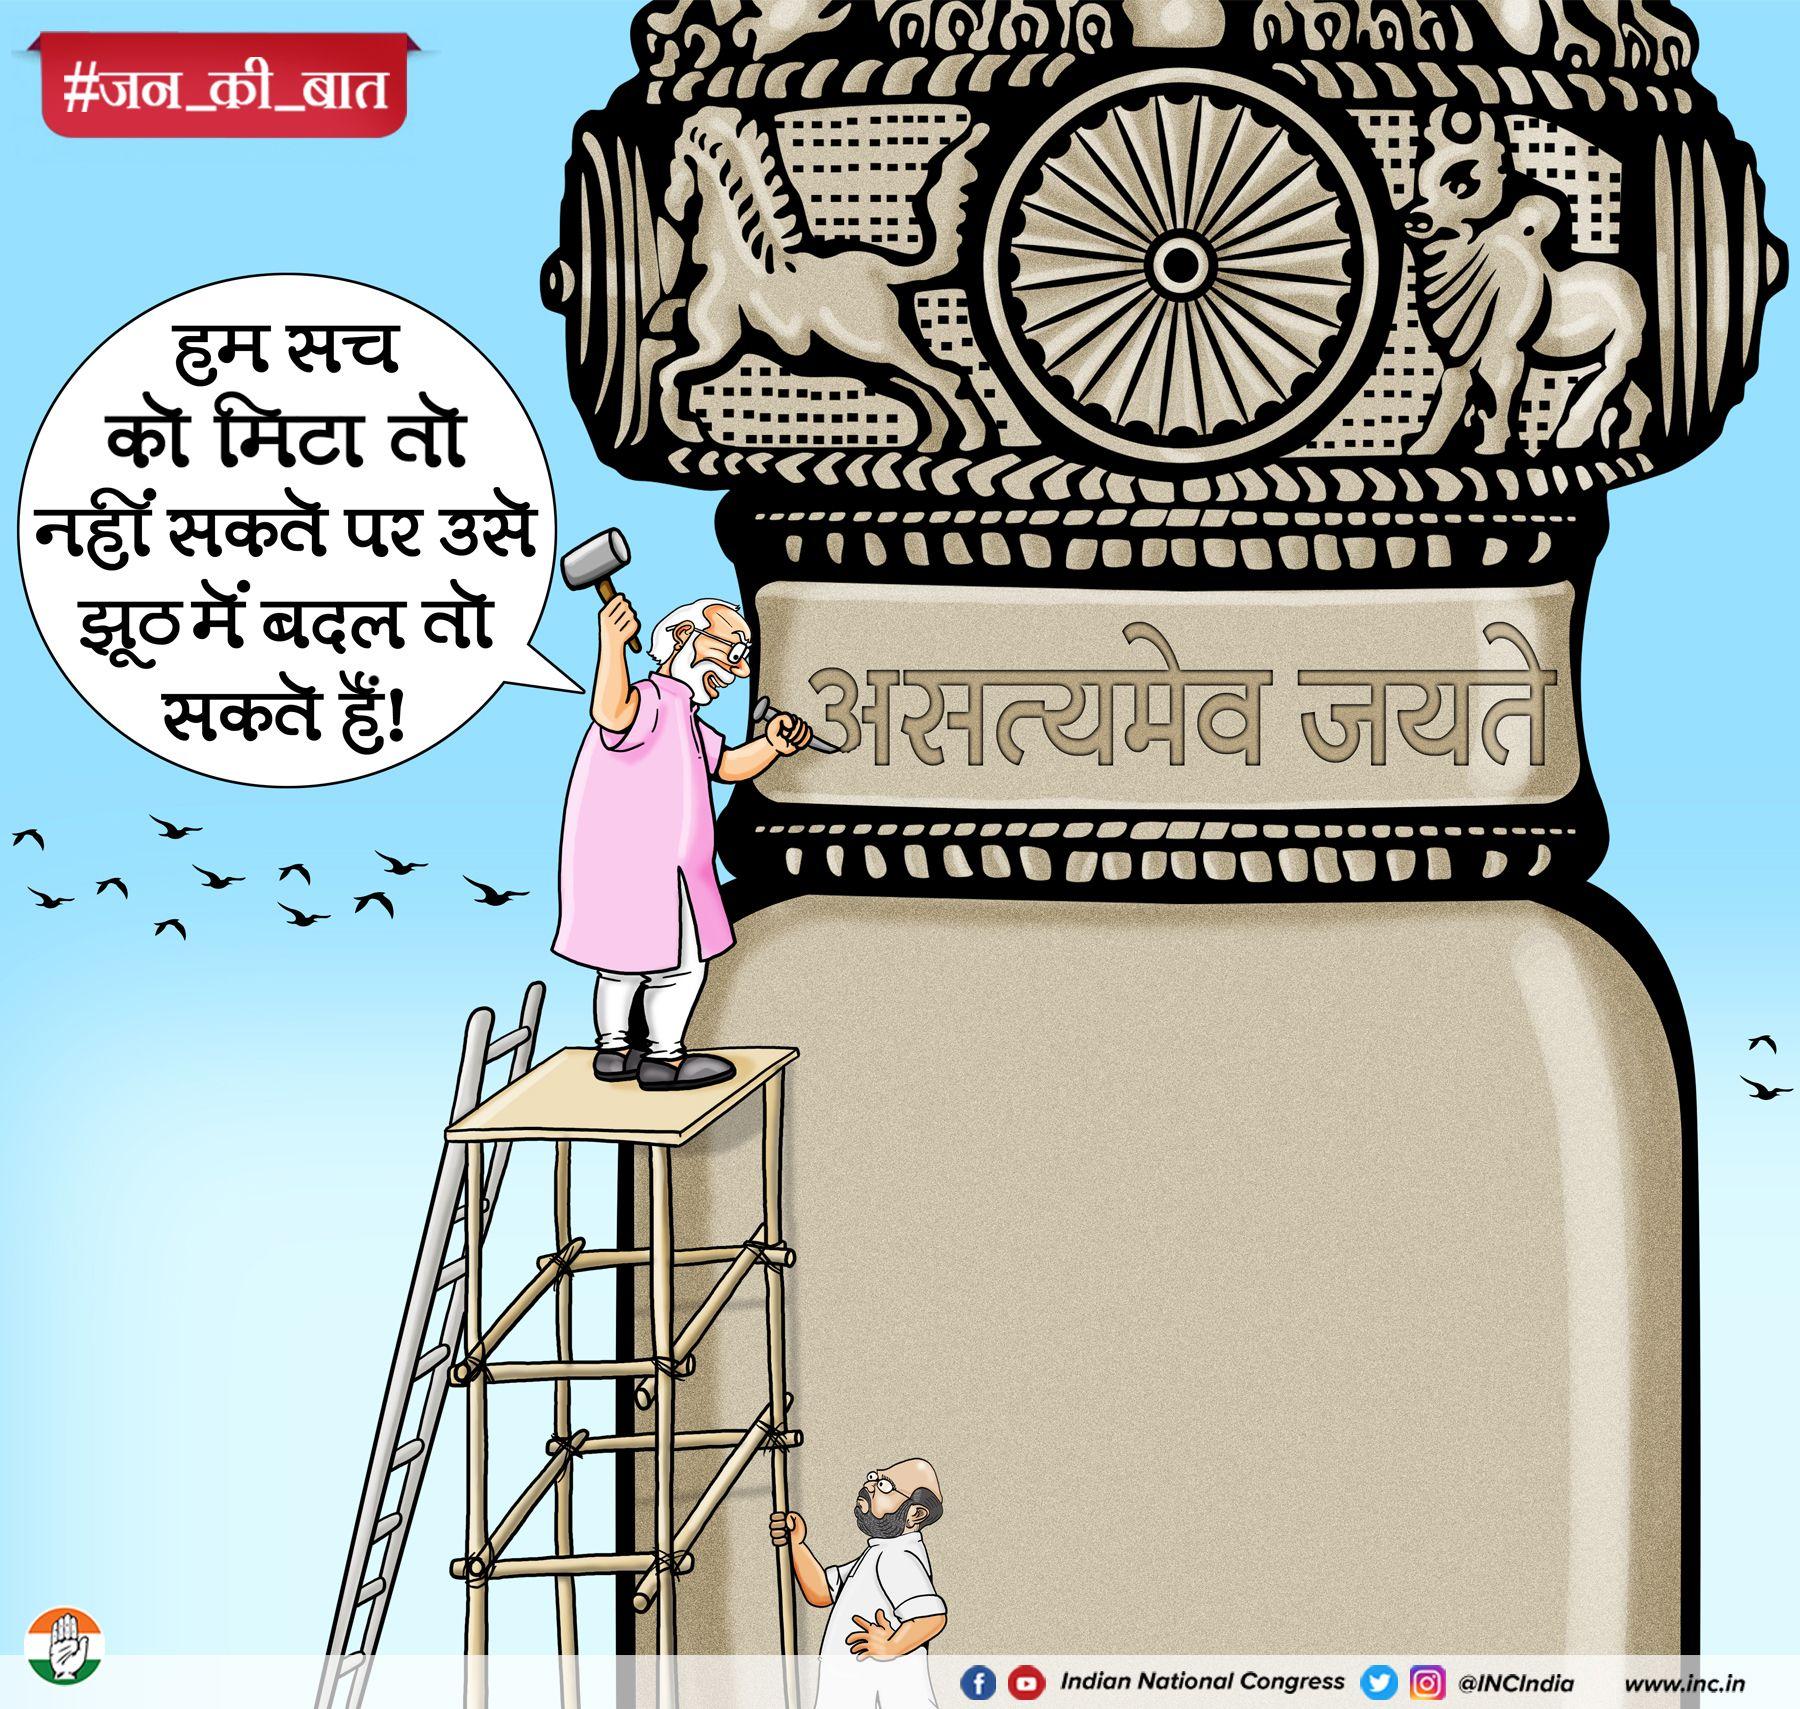 Congress on. Political cartoons, Funny jokes in hindi, Jokes in hindi